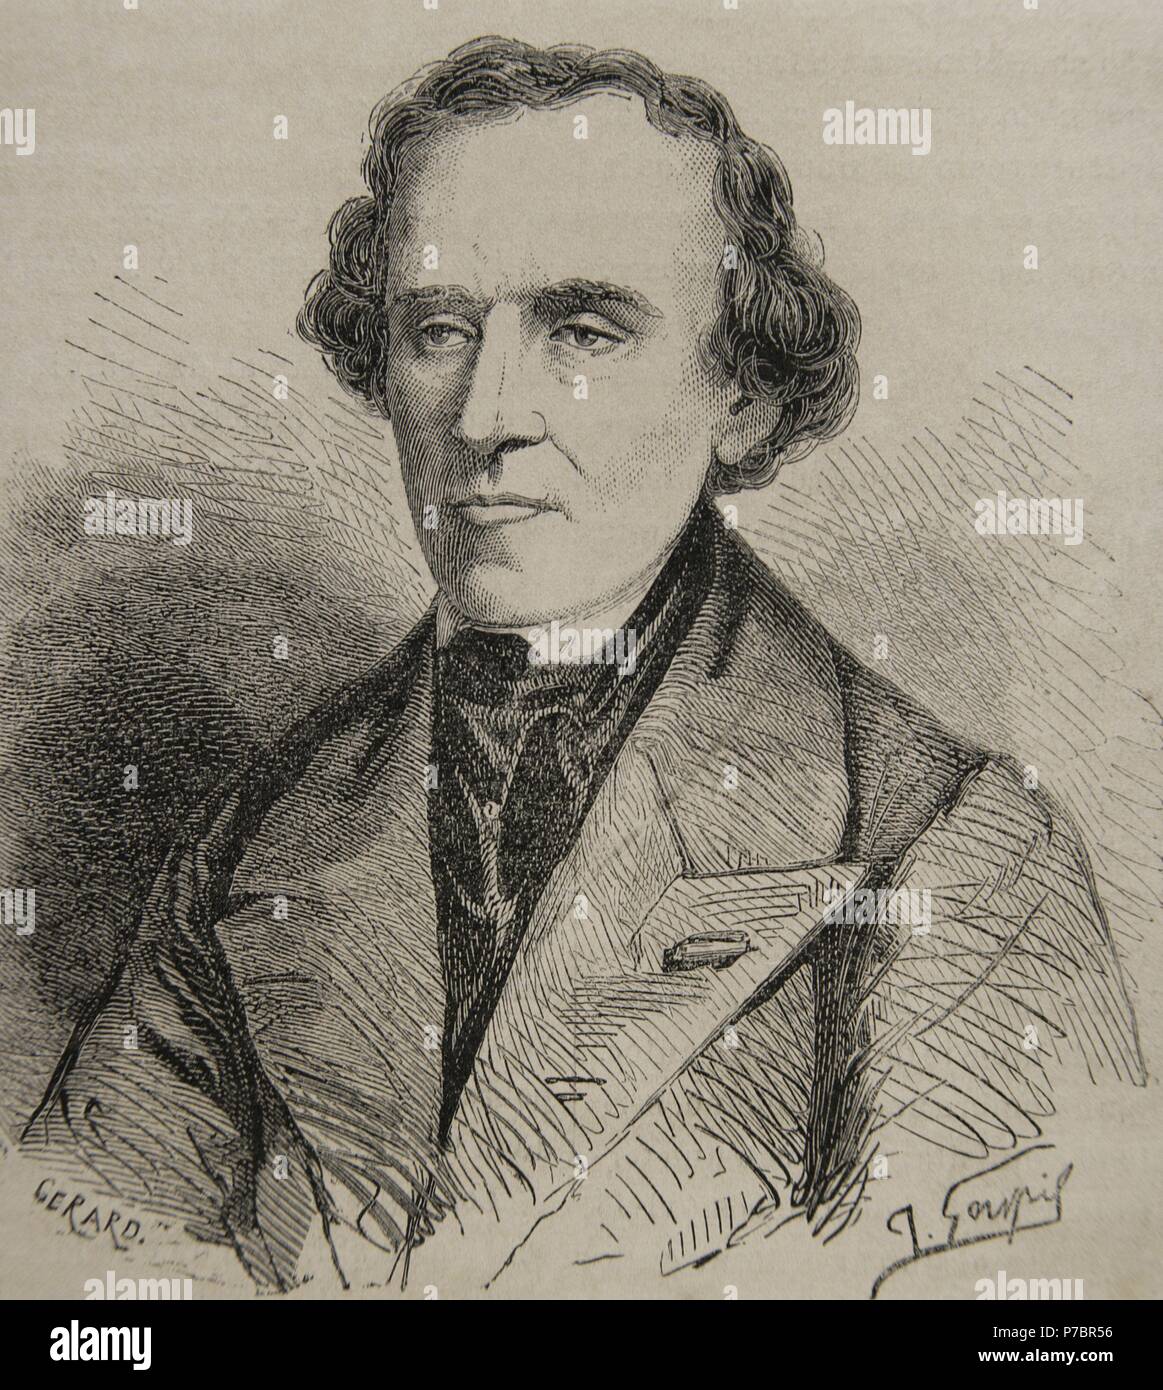 Giacomo Meyerbeer (1791-1864). German opera composer. Portrait. Engraving by Gerard. 19th century. Stock Photo